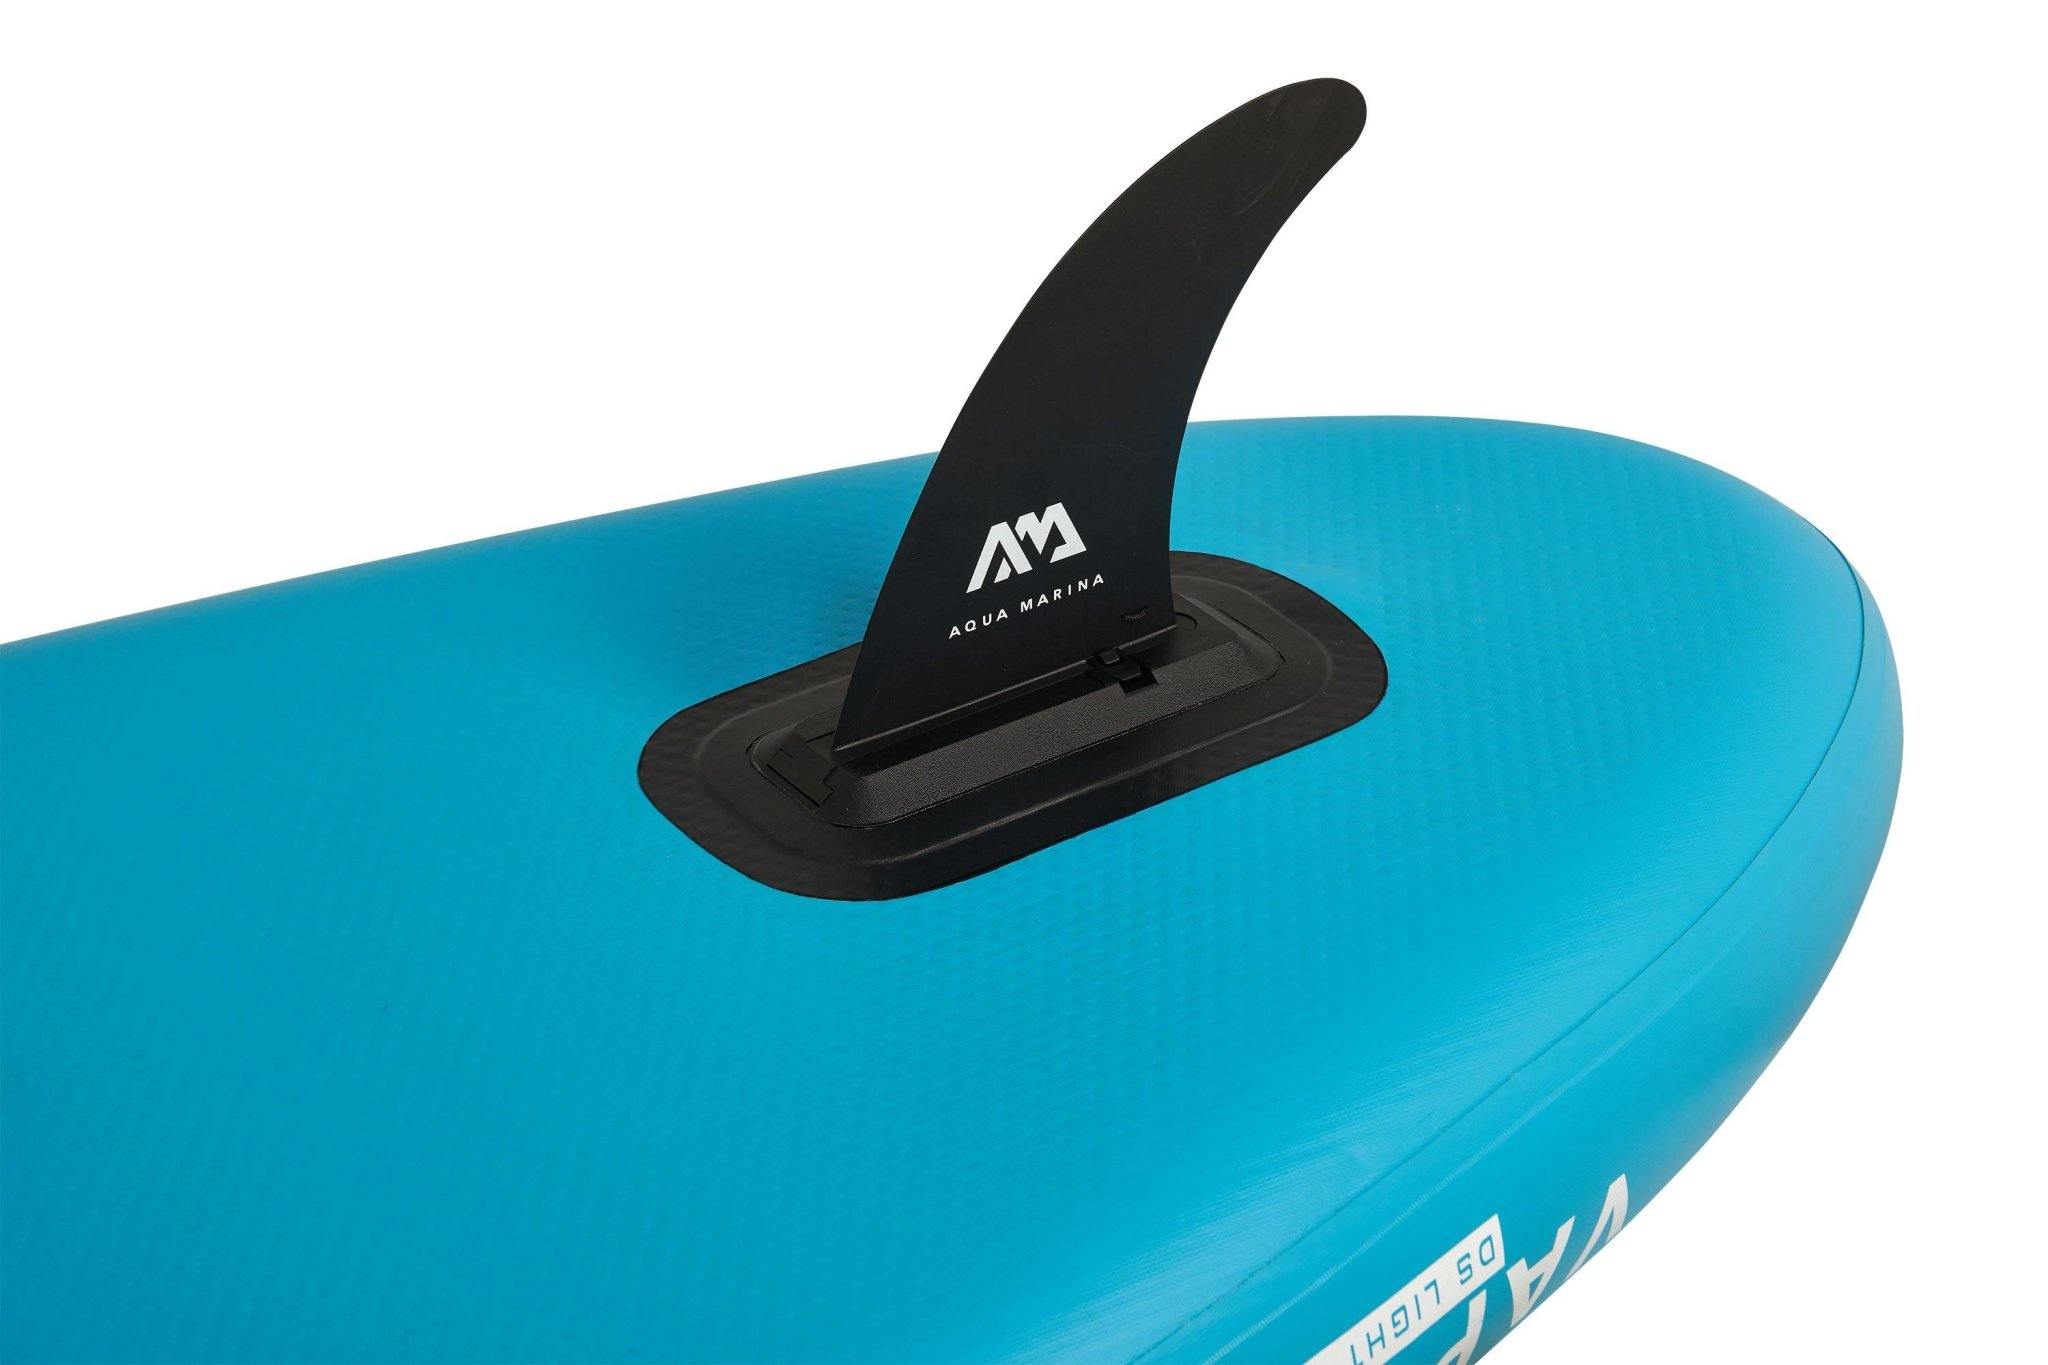 Vapor All-Around iSUP Paddle Board - Dti Direct USA